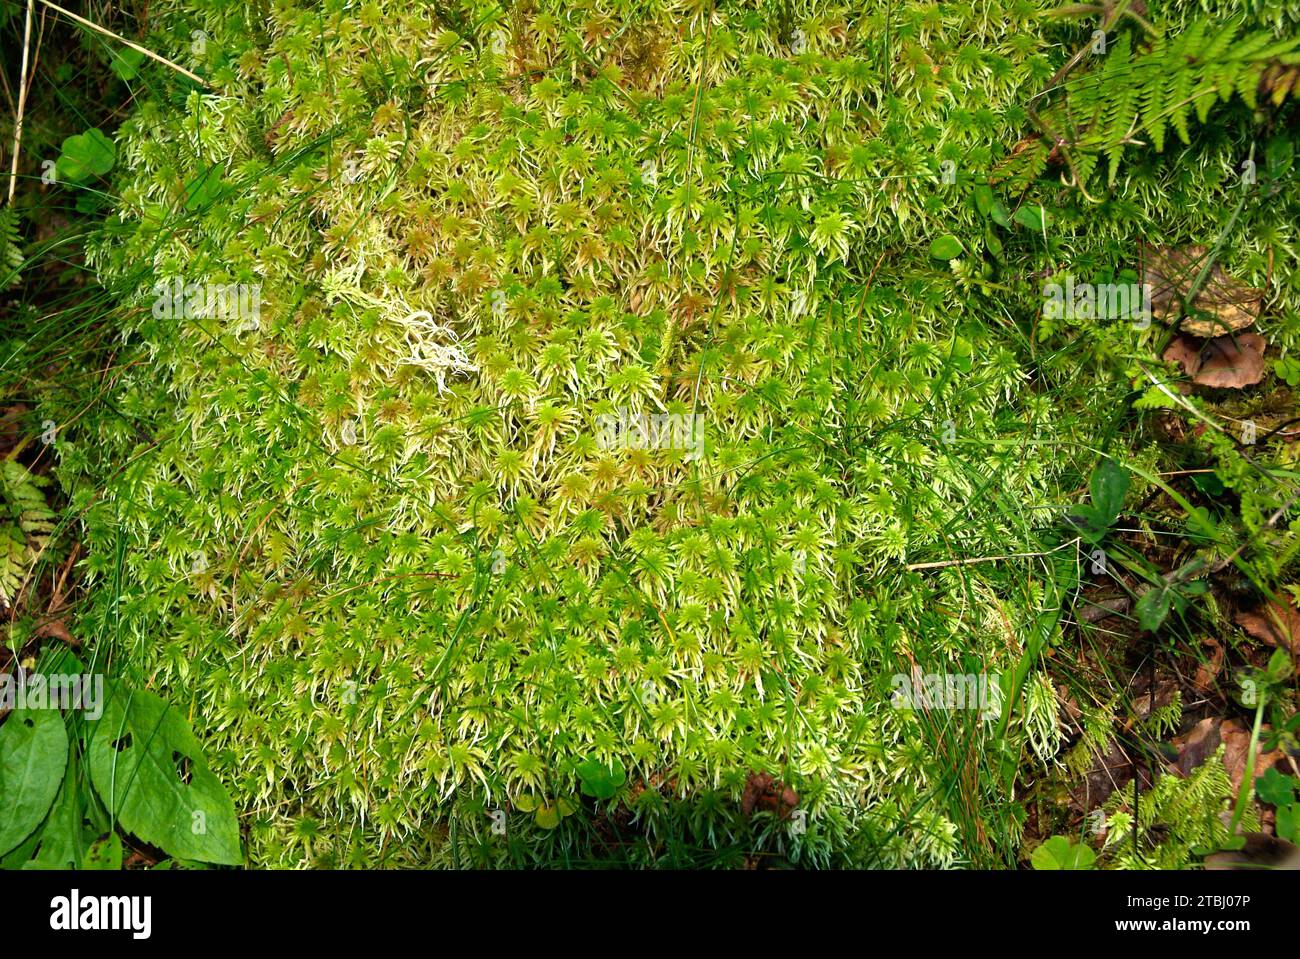 Peat moss (Sphagnum sp.). This photo was taken in Valle de Aran, Lleida province, Catalonia, Spain. Stock Photo